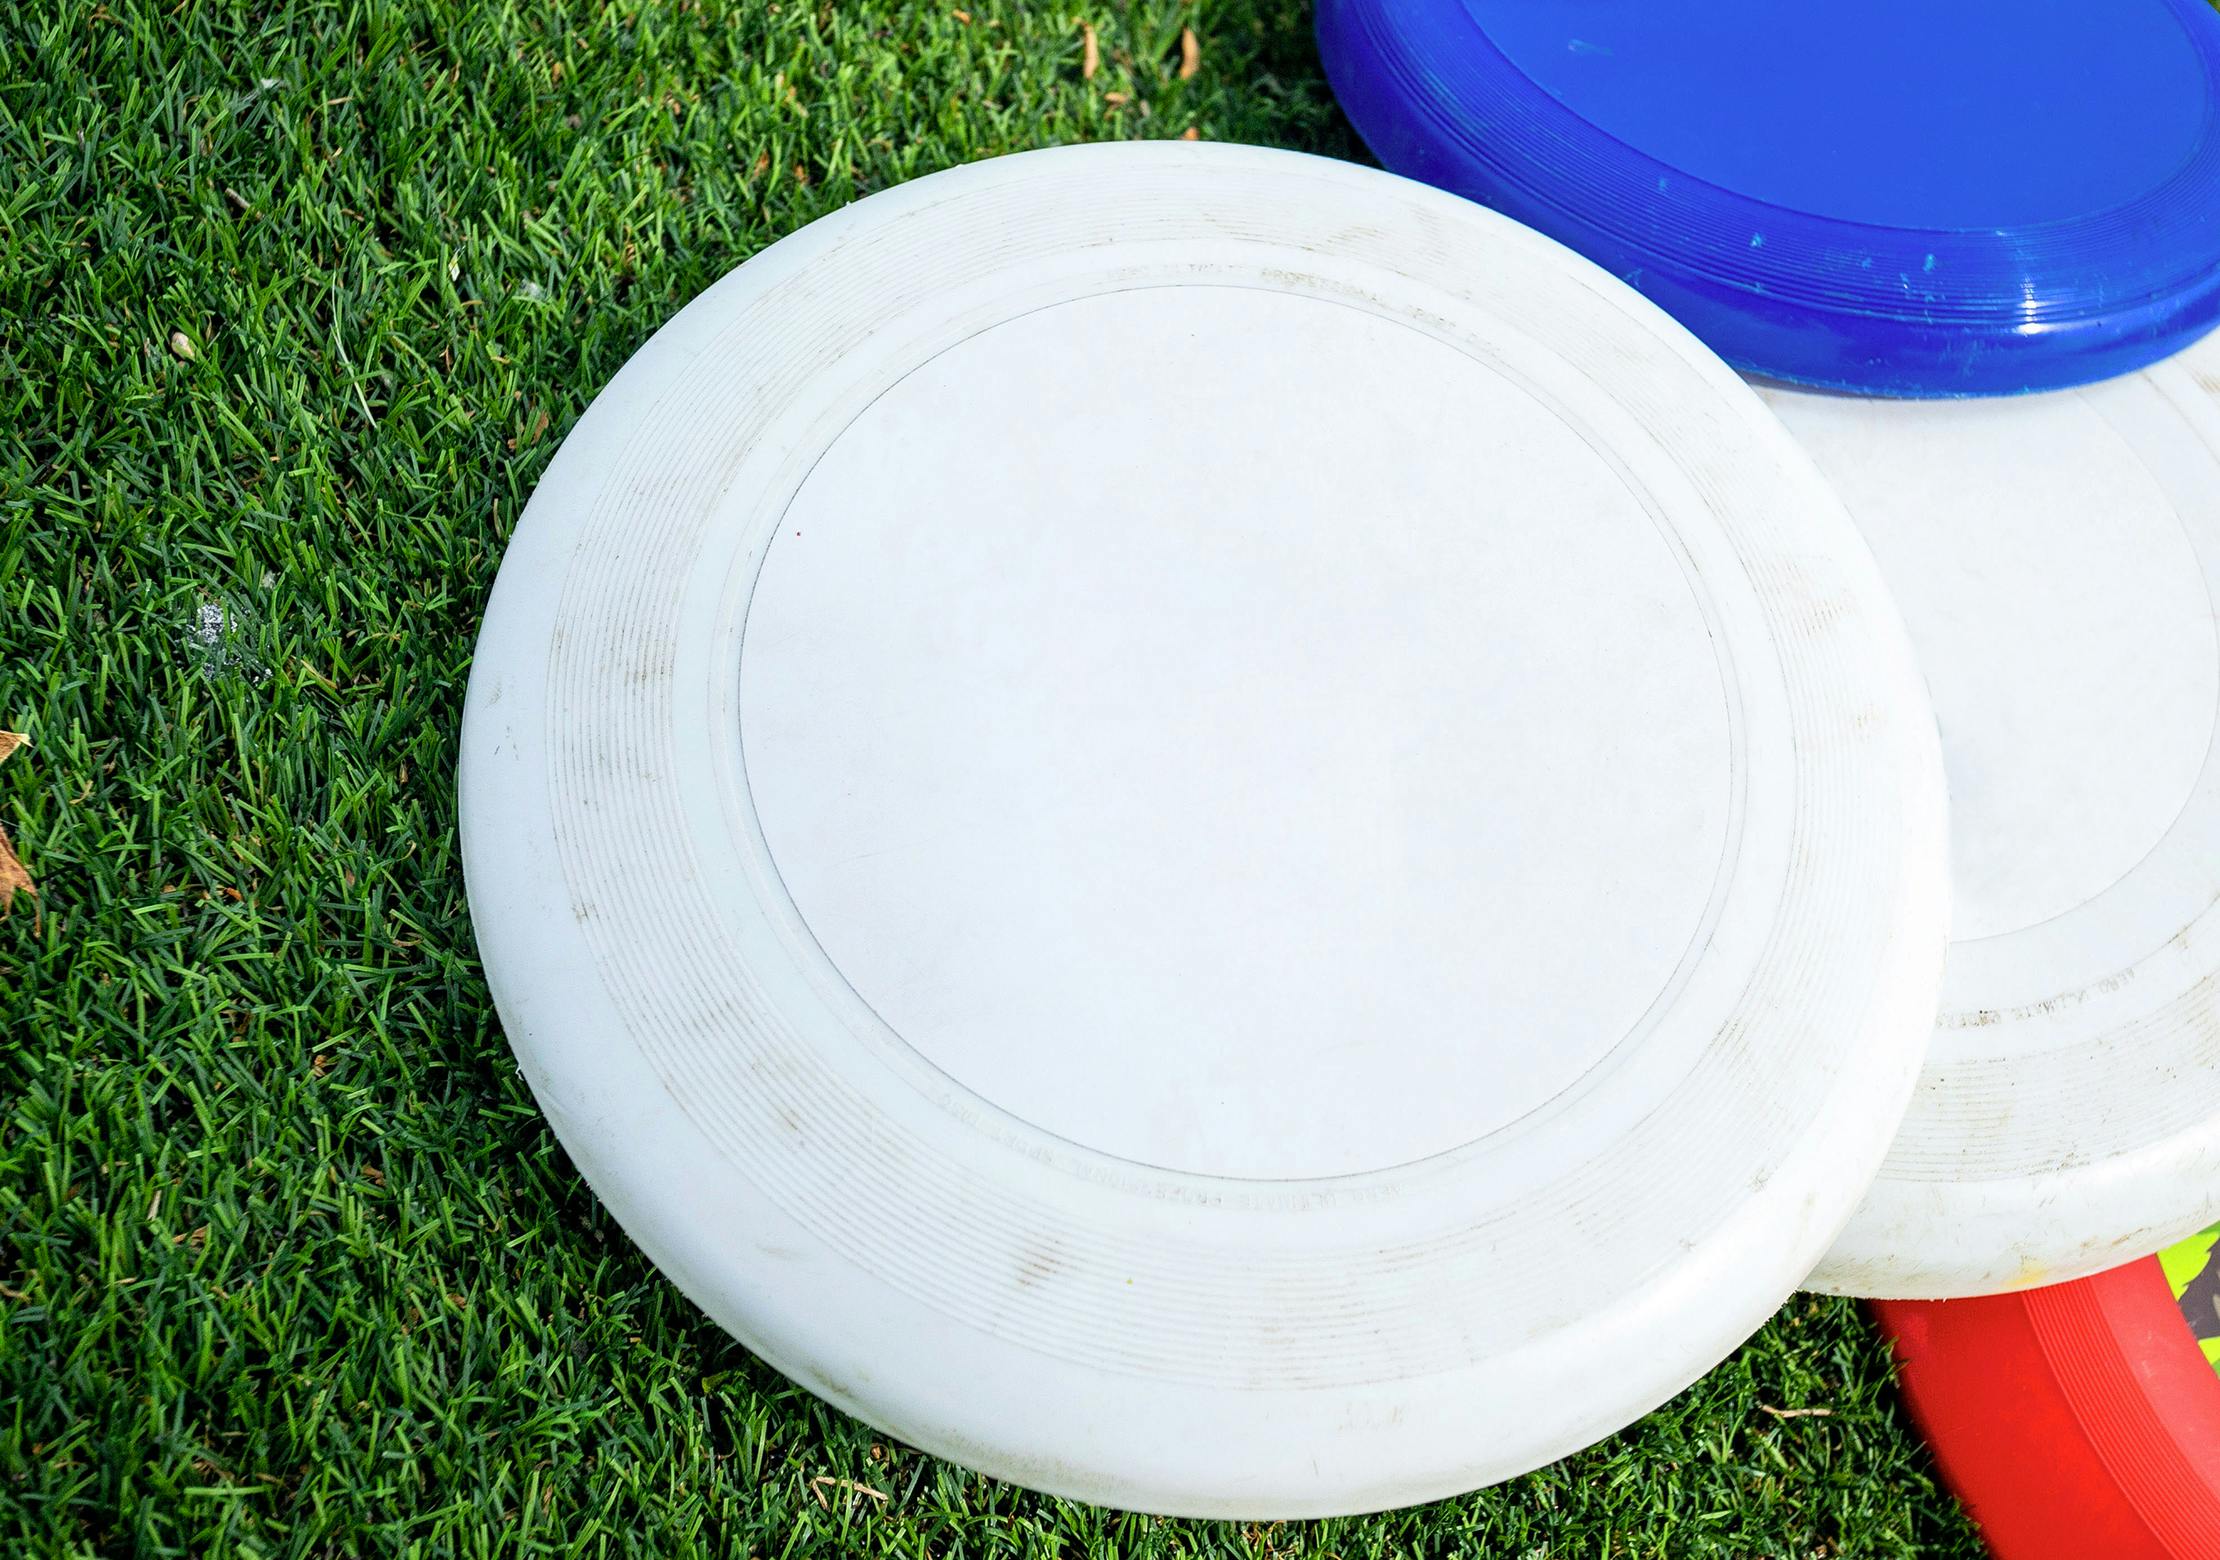 Interfacs d'ultimate Frisbee - Tournois CEPSUM